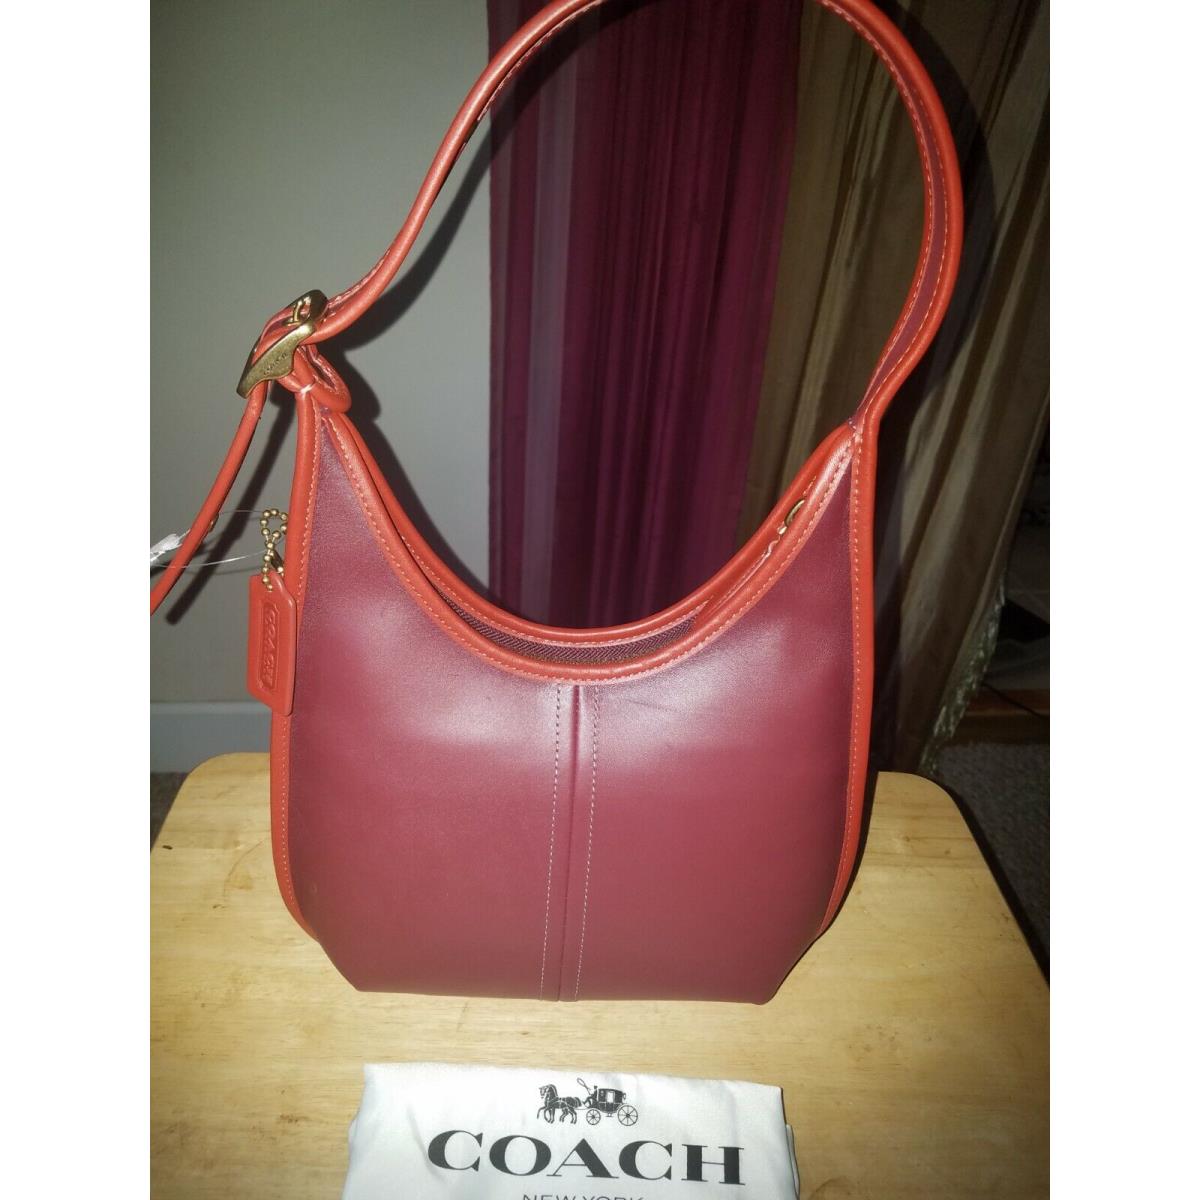 Coach Originals Colorblock Ergo Leather Shoulder Bag Wine Multi 